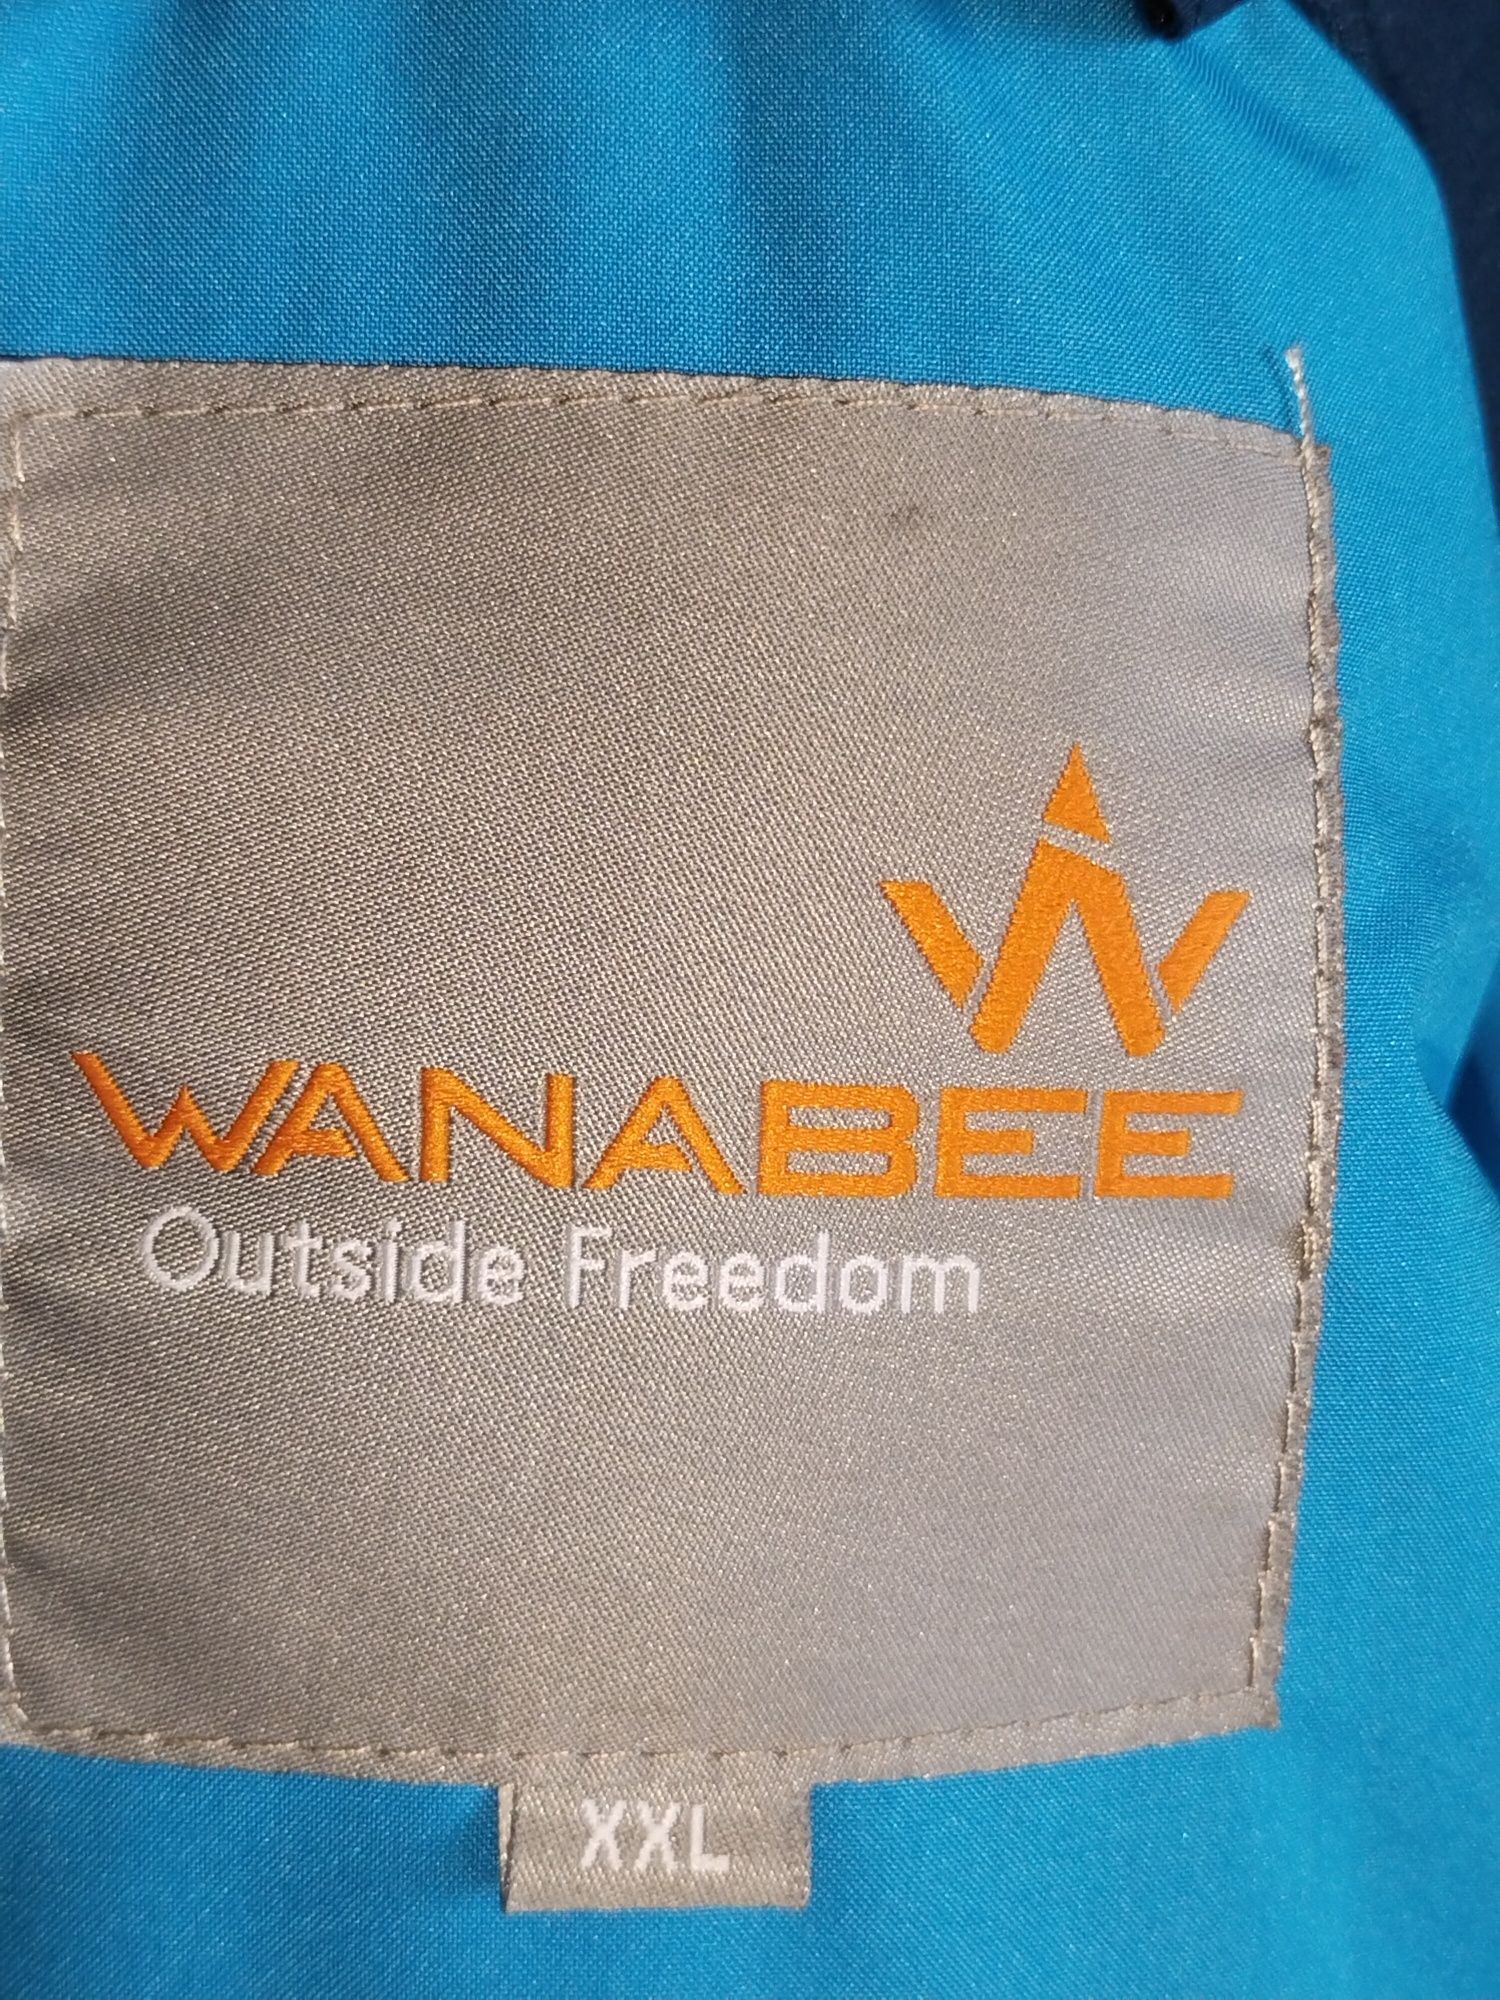 Спортивна куртка WANABEE. Размер XXL Куртка для активного отдыха.